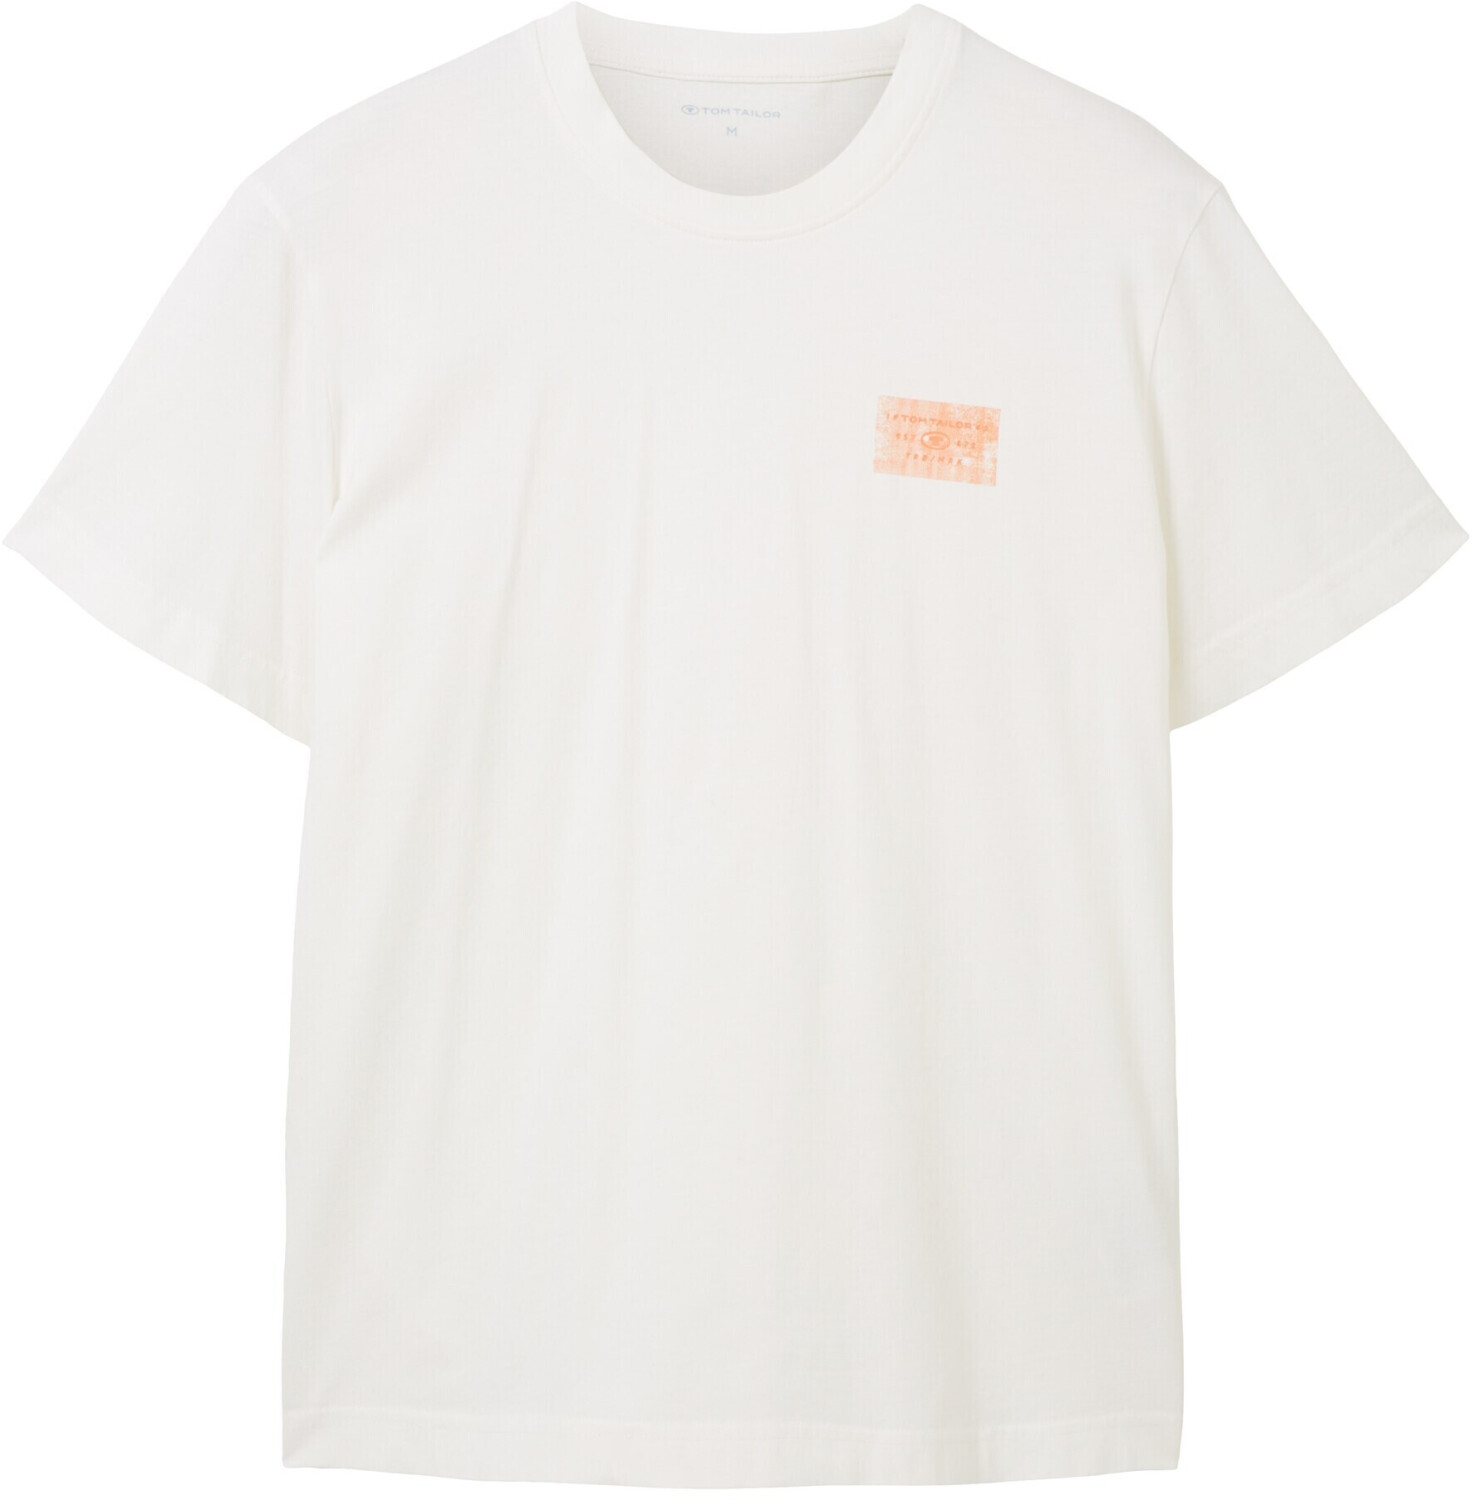 Tom (1036431-10332) Print | off 7,47 Tailor € Preisvergleich T-Shirt ab bei mit white